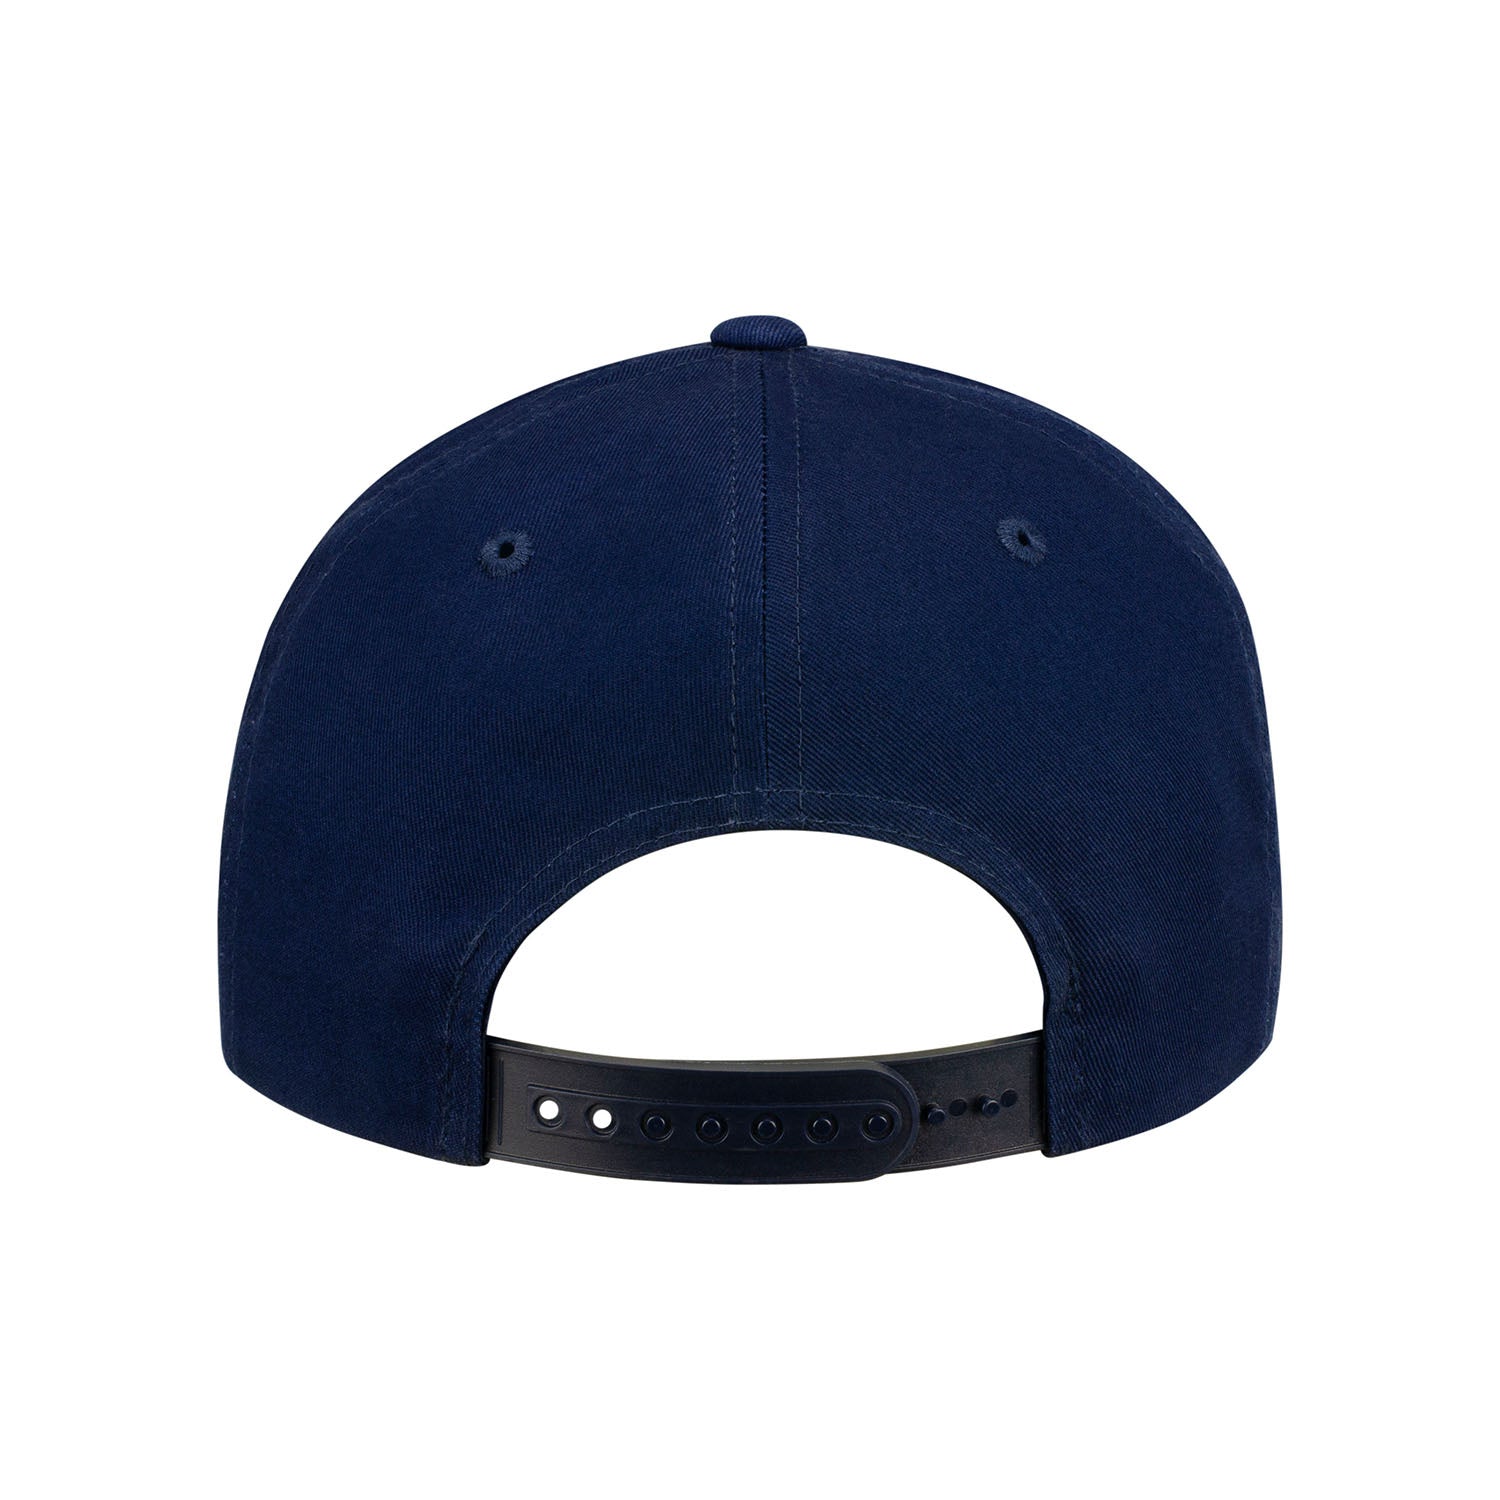 Vancouver Titans Blue Snapback Hat - Back View